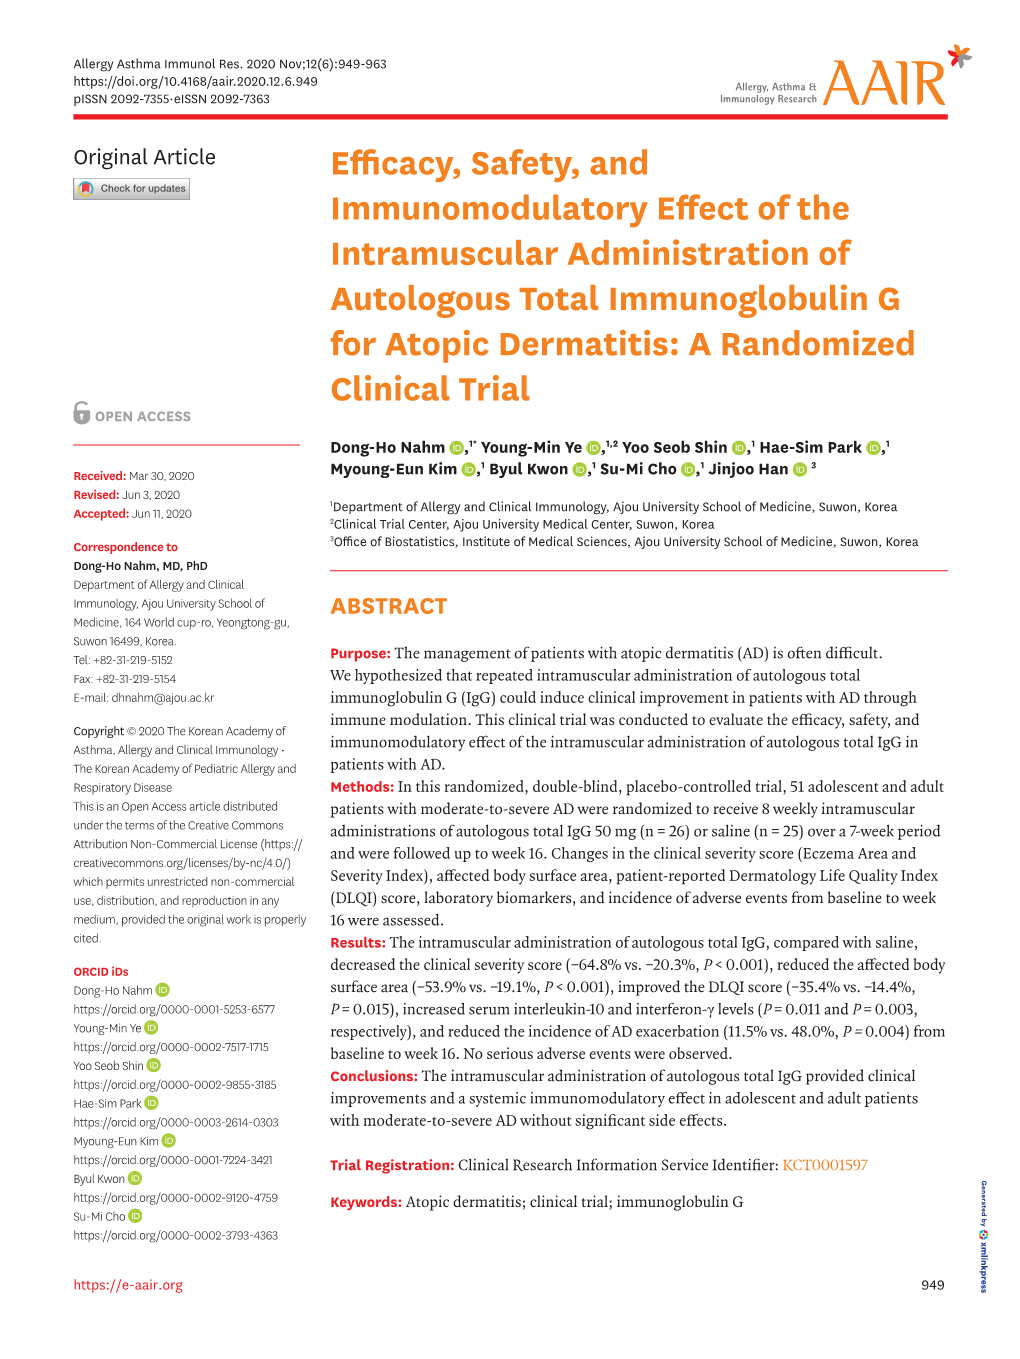 Efficacy, Safety, and Immunomodulatory Effect of The